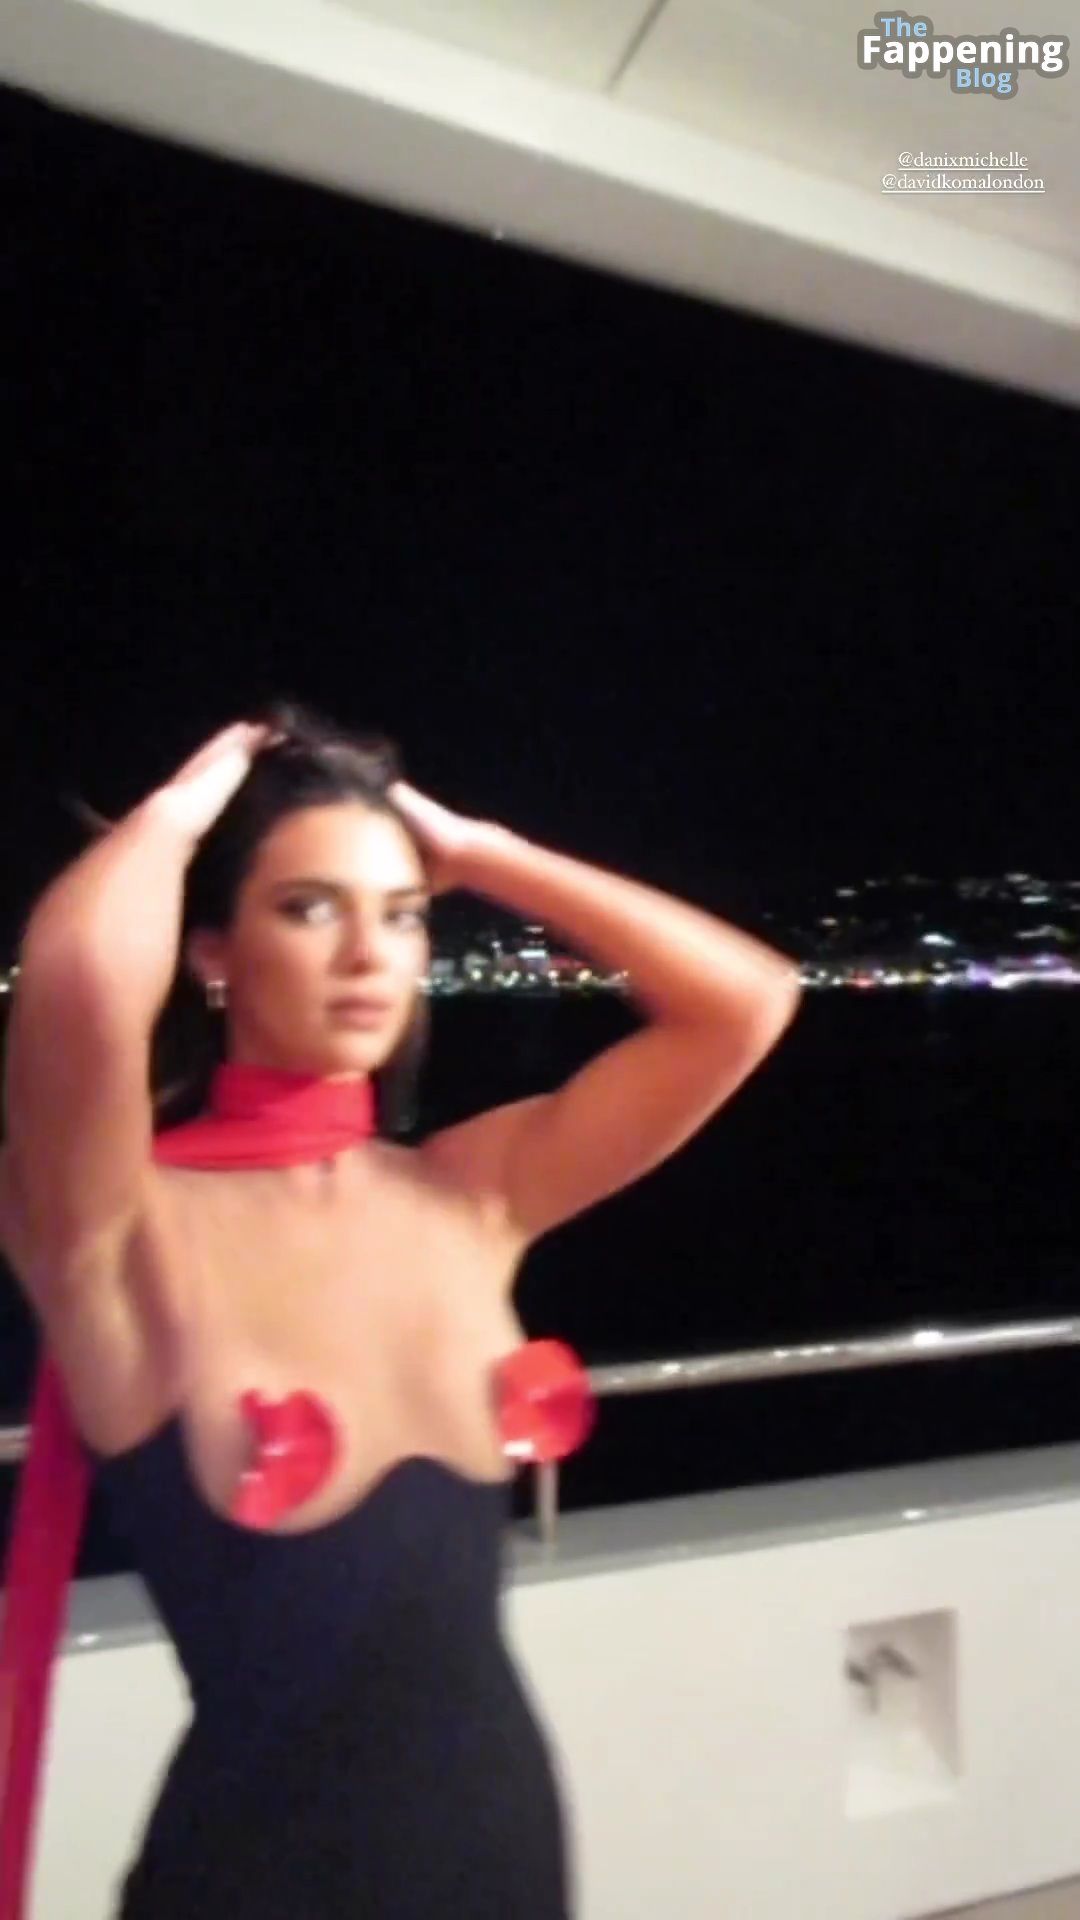 Kendall-Jenner-Topless-The-Fappening-Blog-6-1.jpg